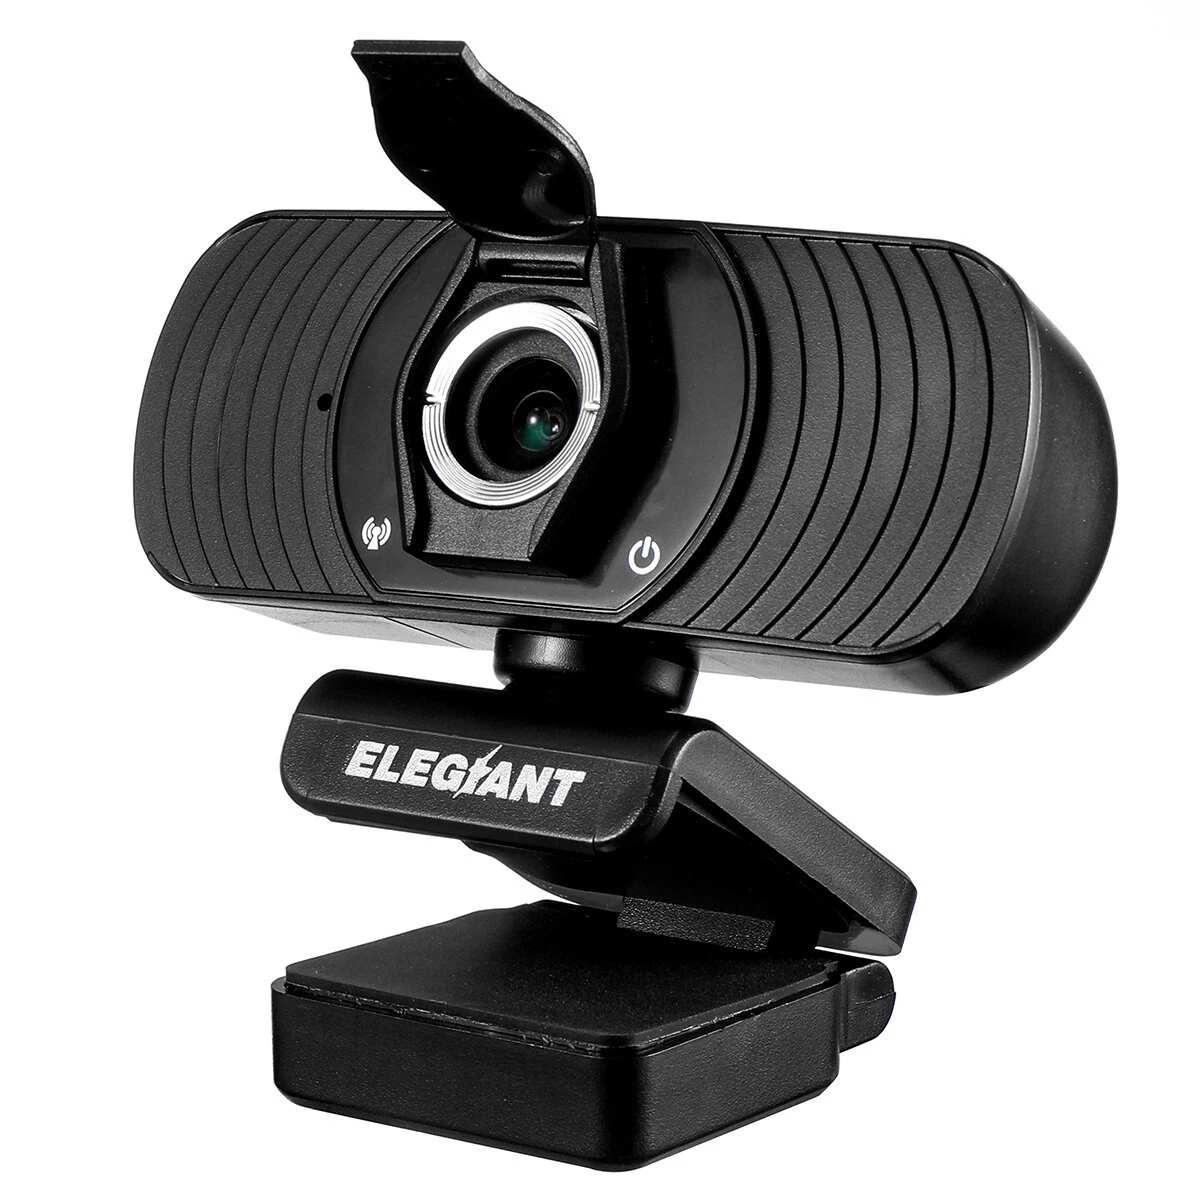 ELEGIANT EGC-C01HD Webcam  Banggood Coupon Promo Code (Pl warehouse)